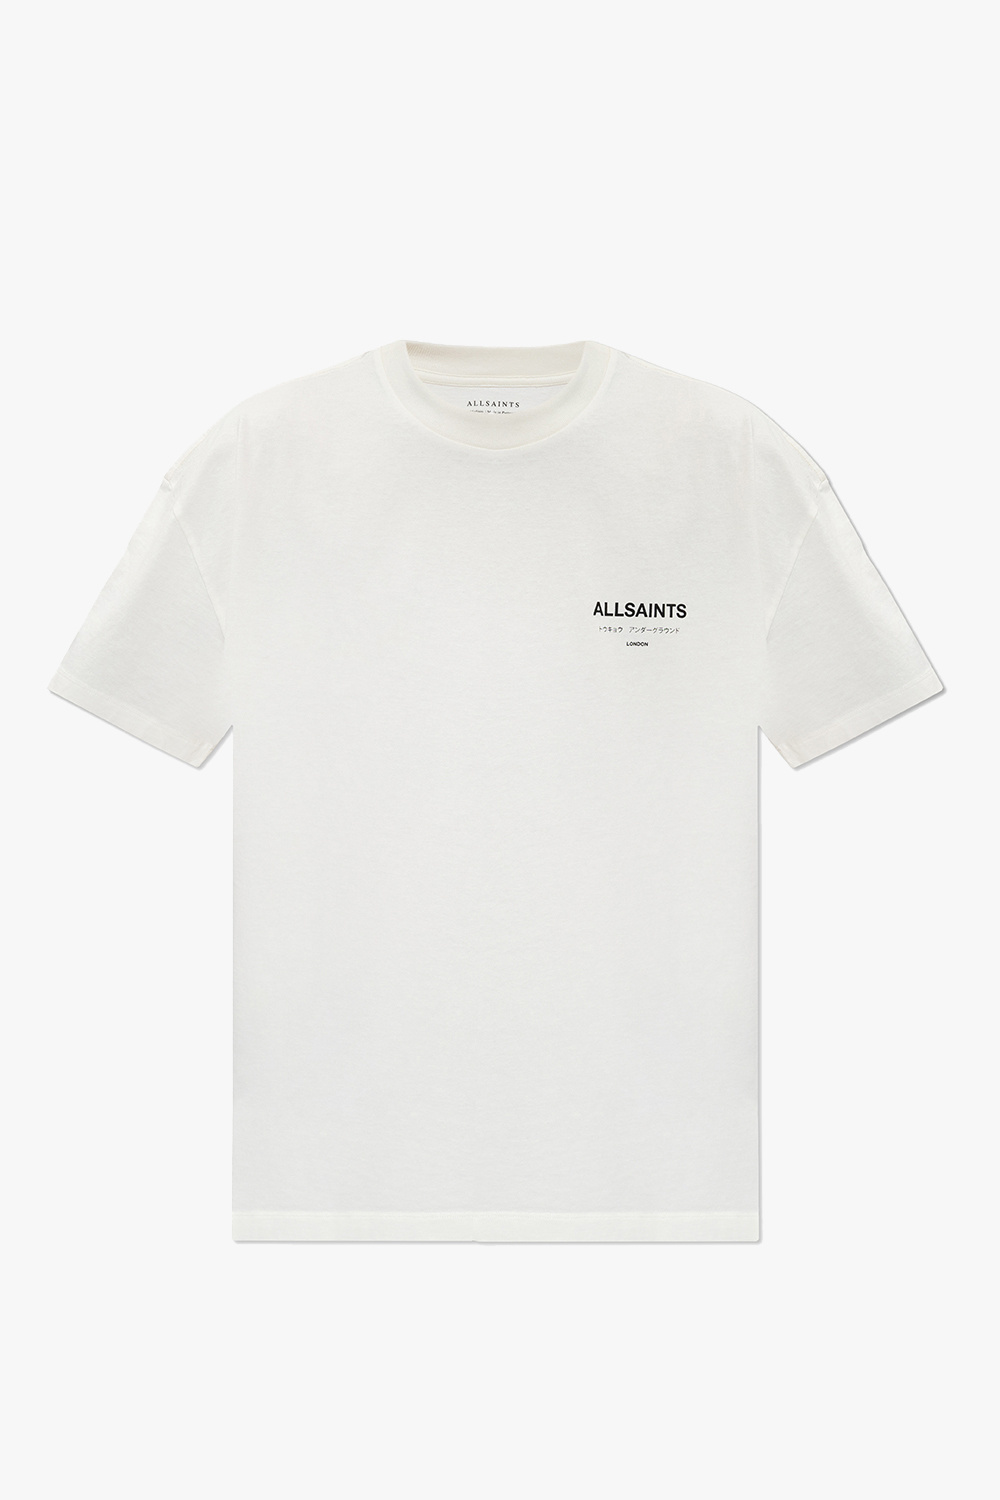 AllSaints ‘Underground’ T-shirt | Men's Clothing | Vitkac